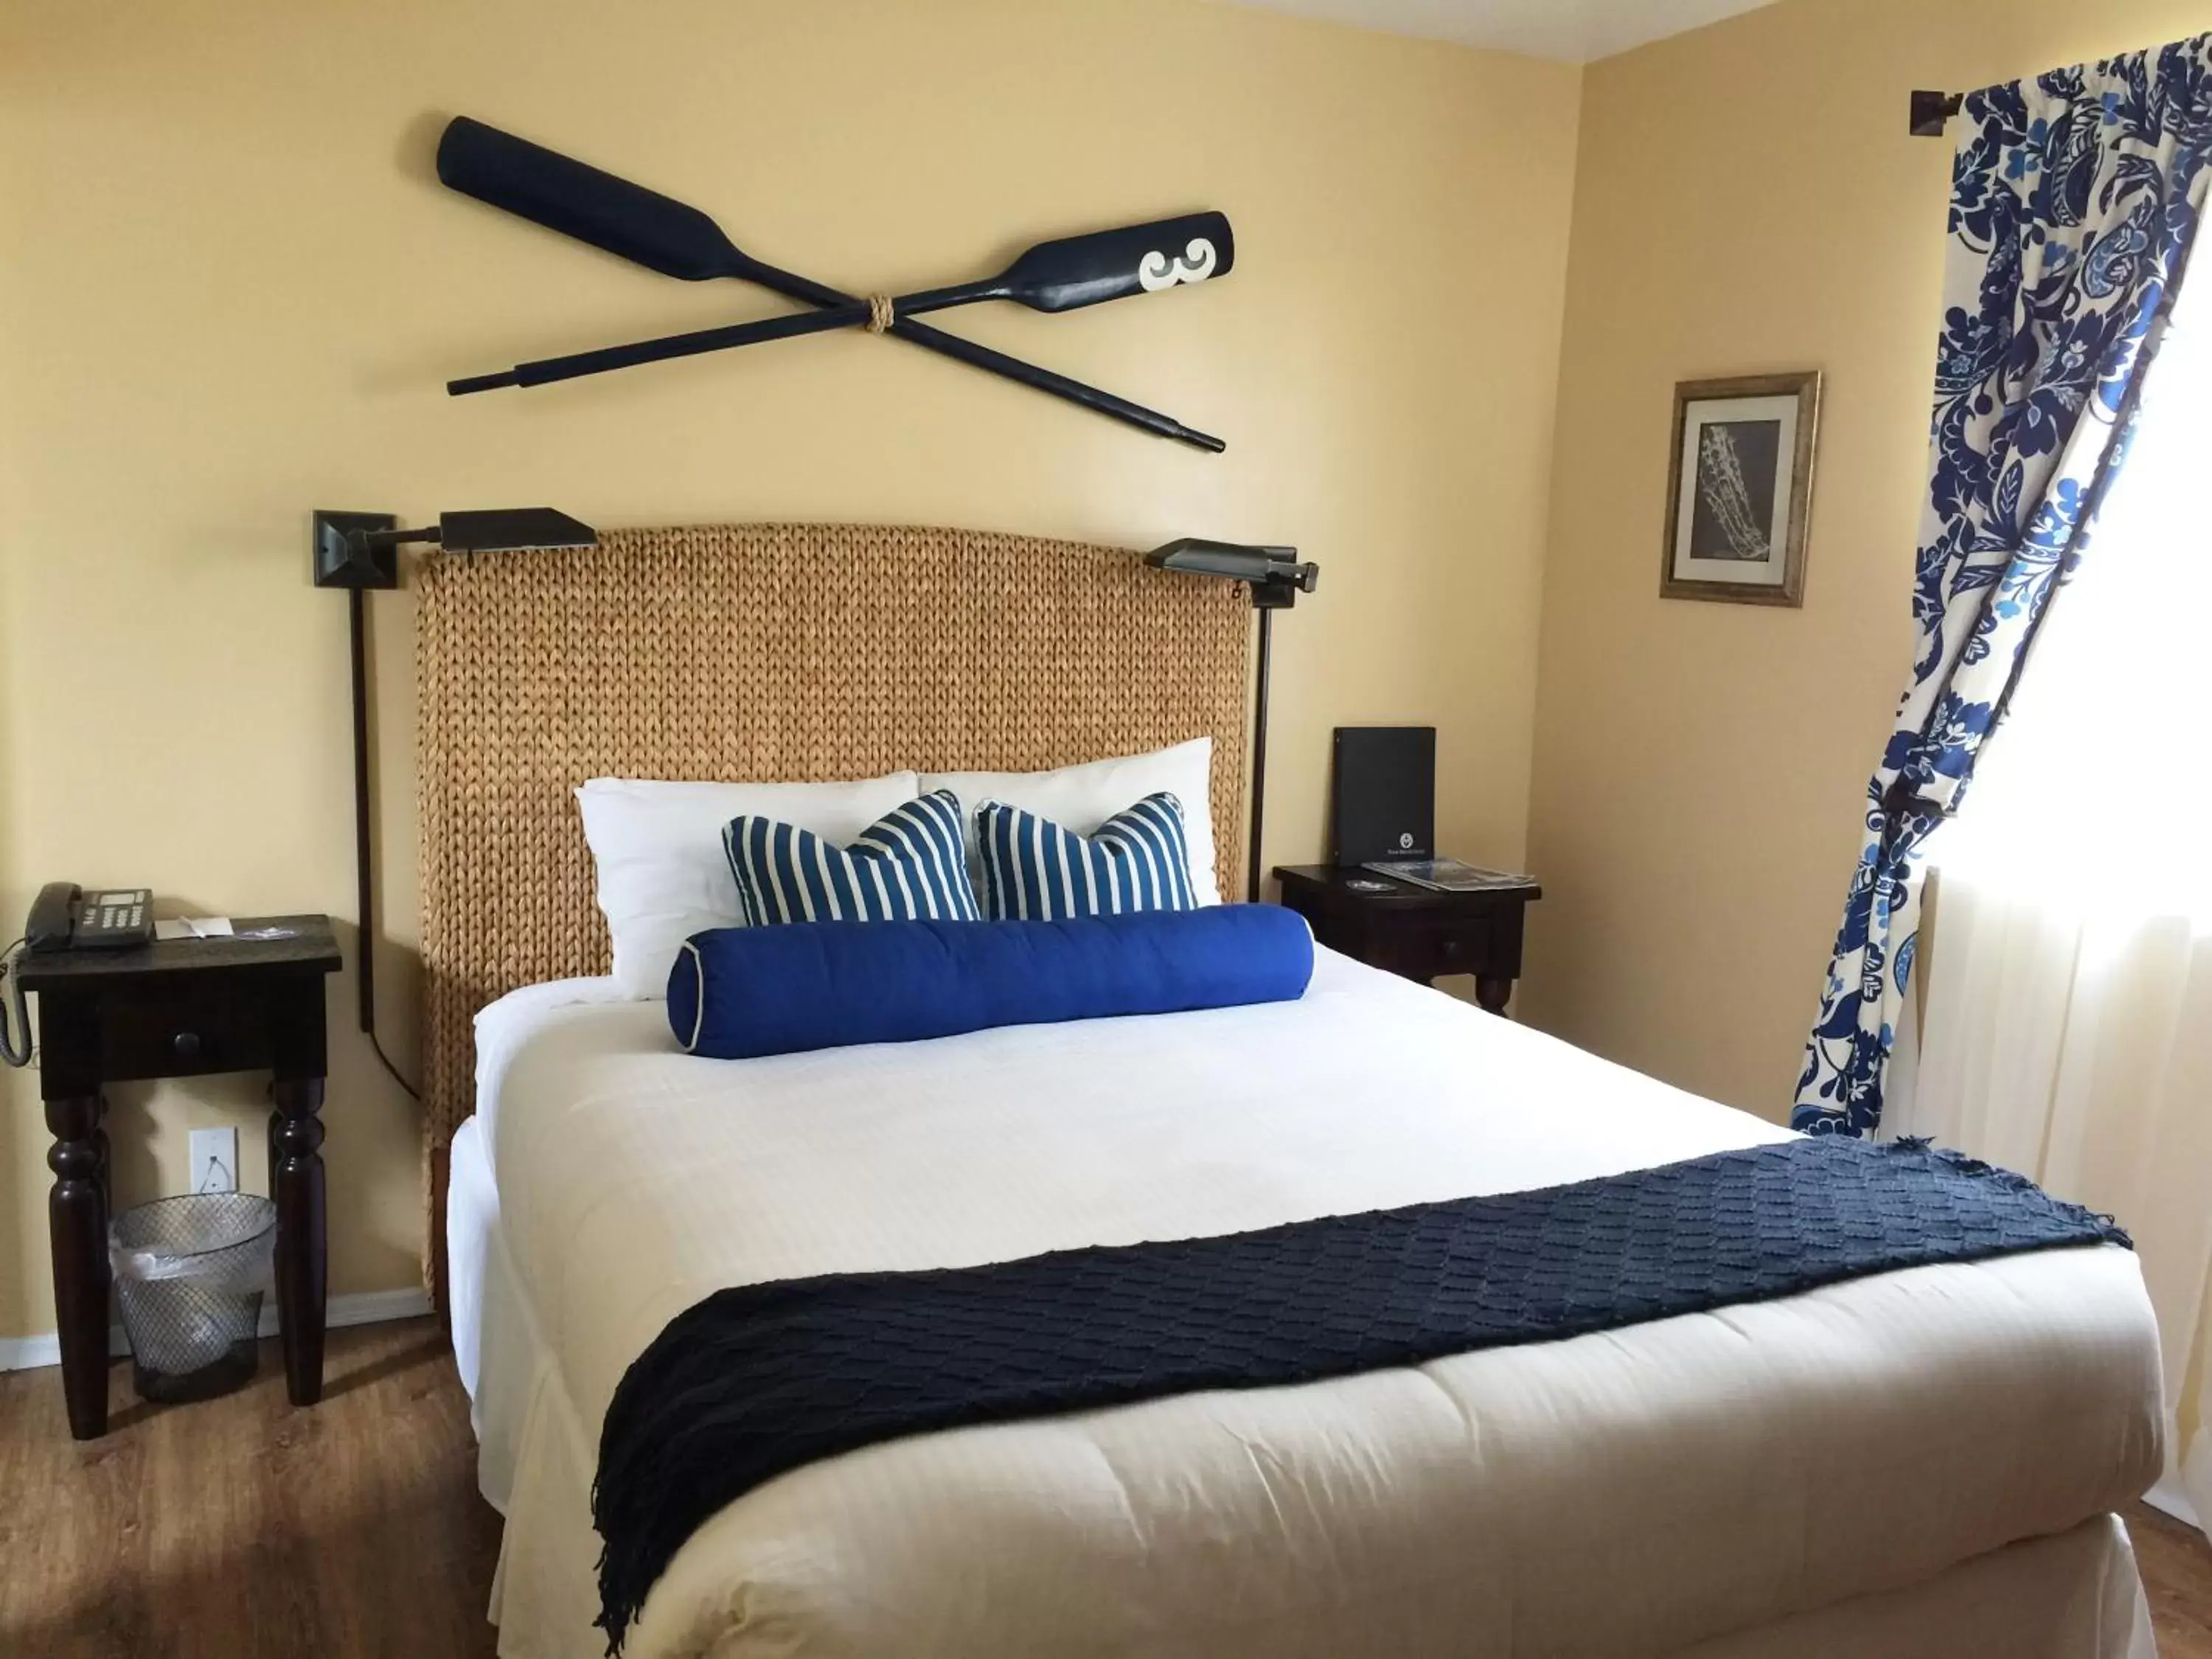 Bed, Room Photo in West Cliff Inn, A Four Sisters Inn